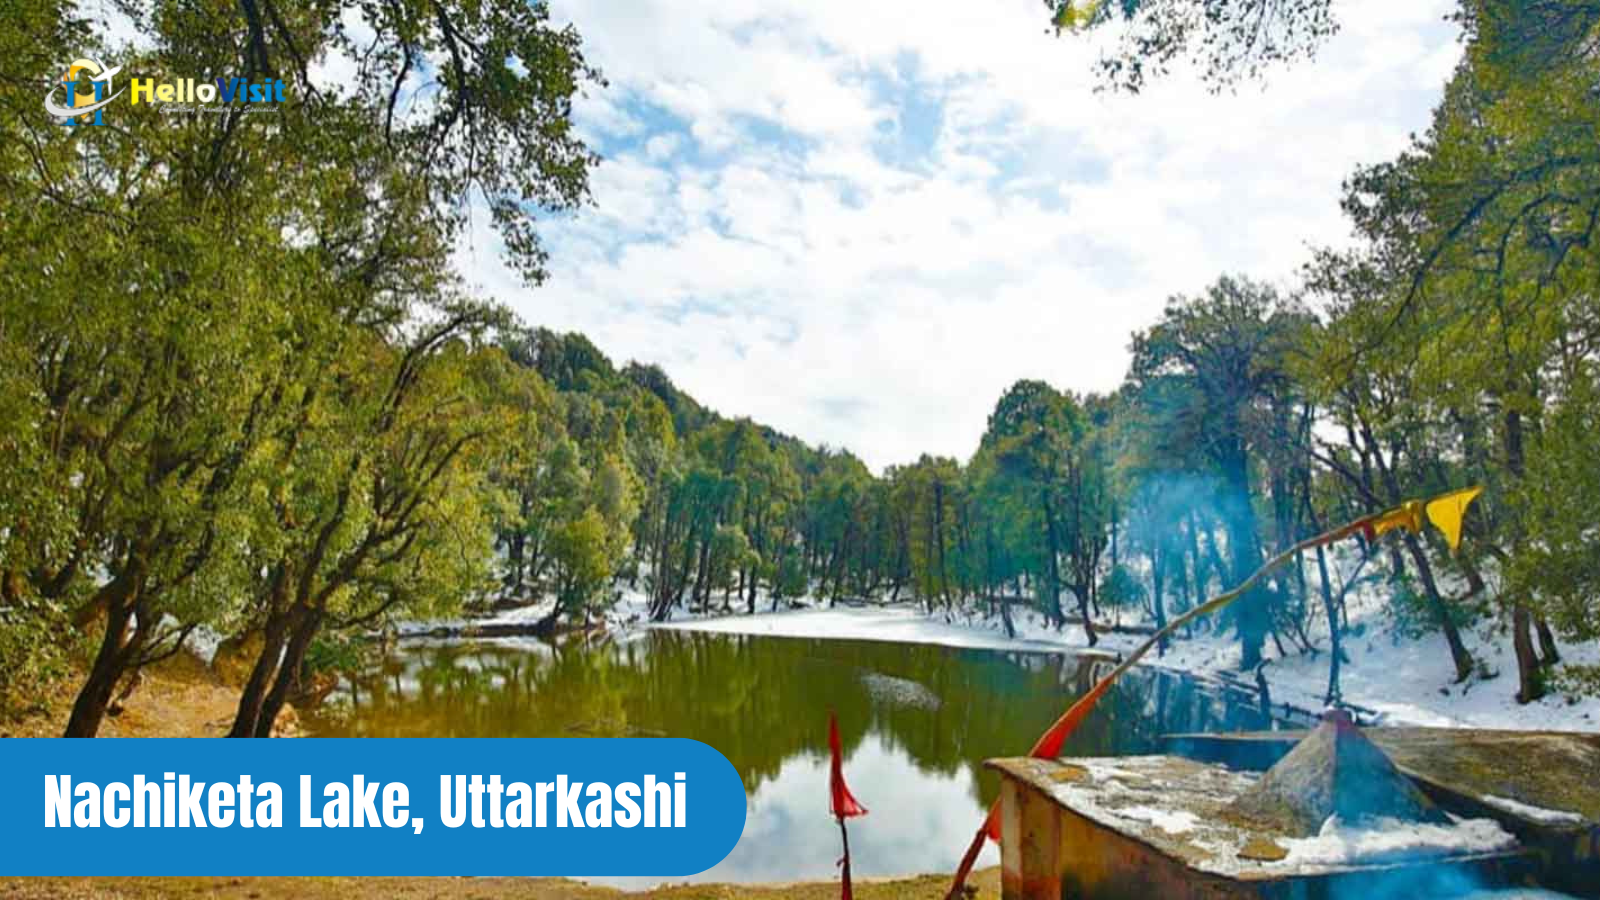 Nachiketa Lake, Uttarkashi